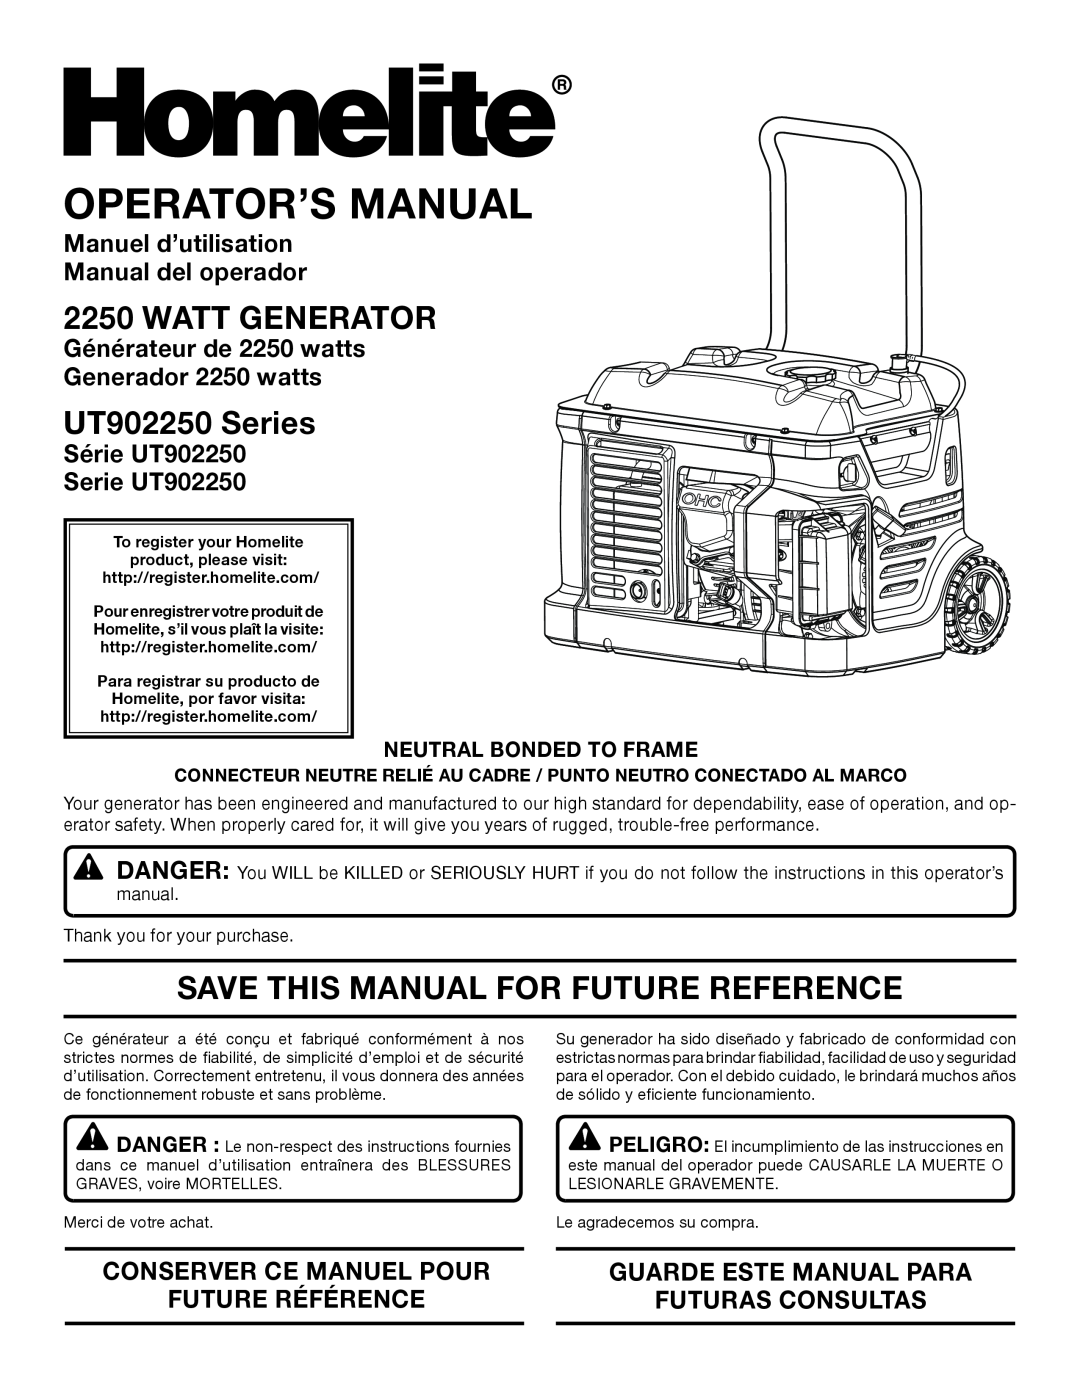 Homelite manuel dutilisation Watt Generator, UT902250 Series, Save This Manual For Future Reference, Operator’S Manual 